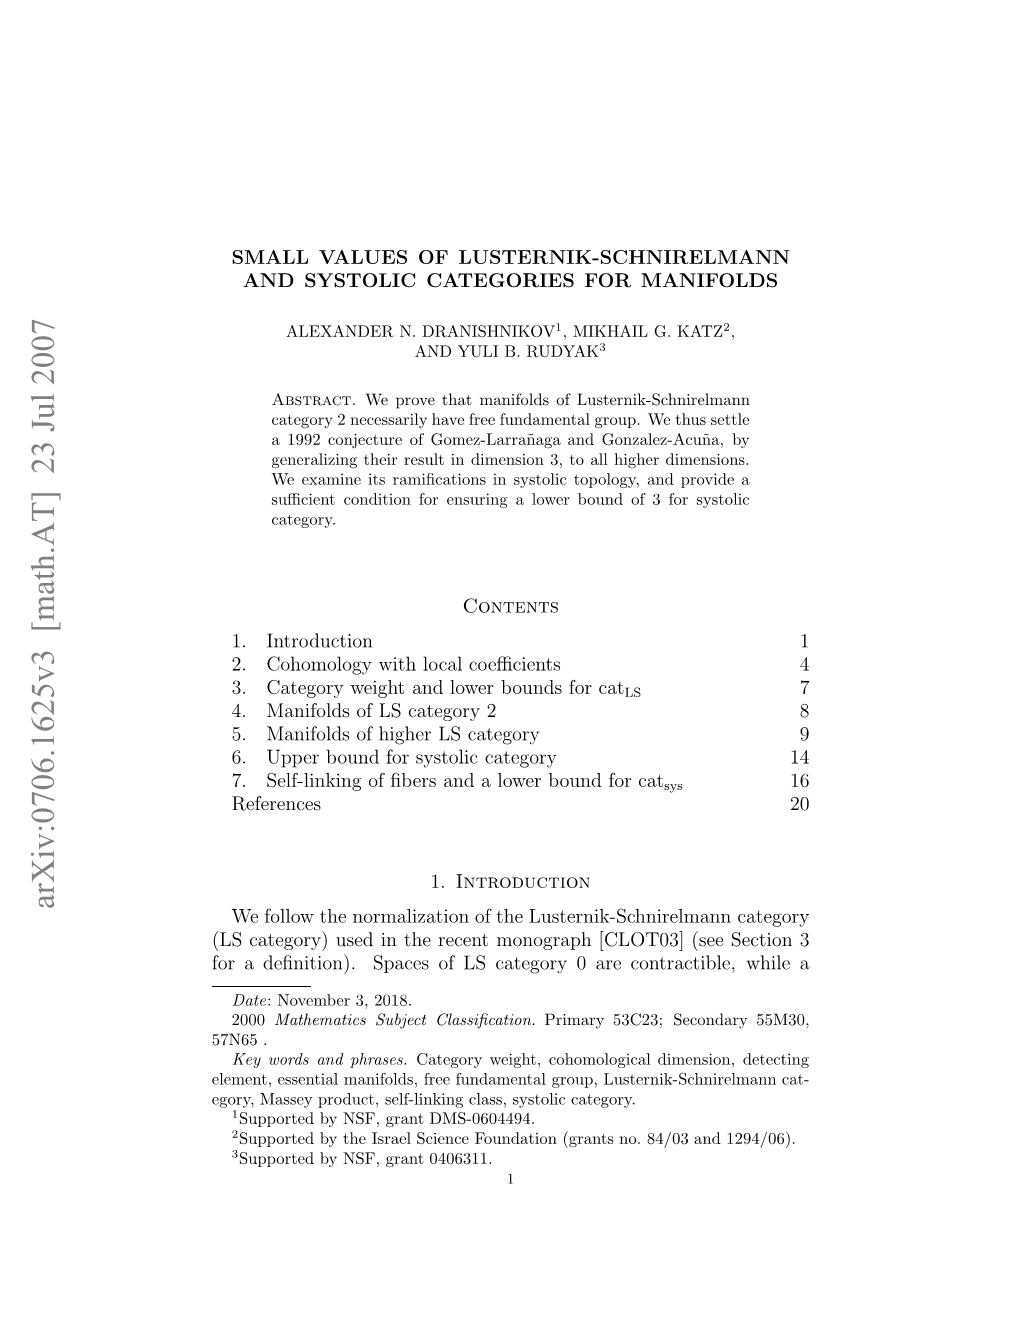 Small Values of Lusternik-Schnirelmann And